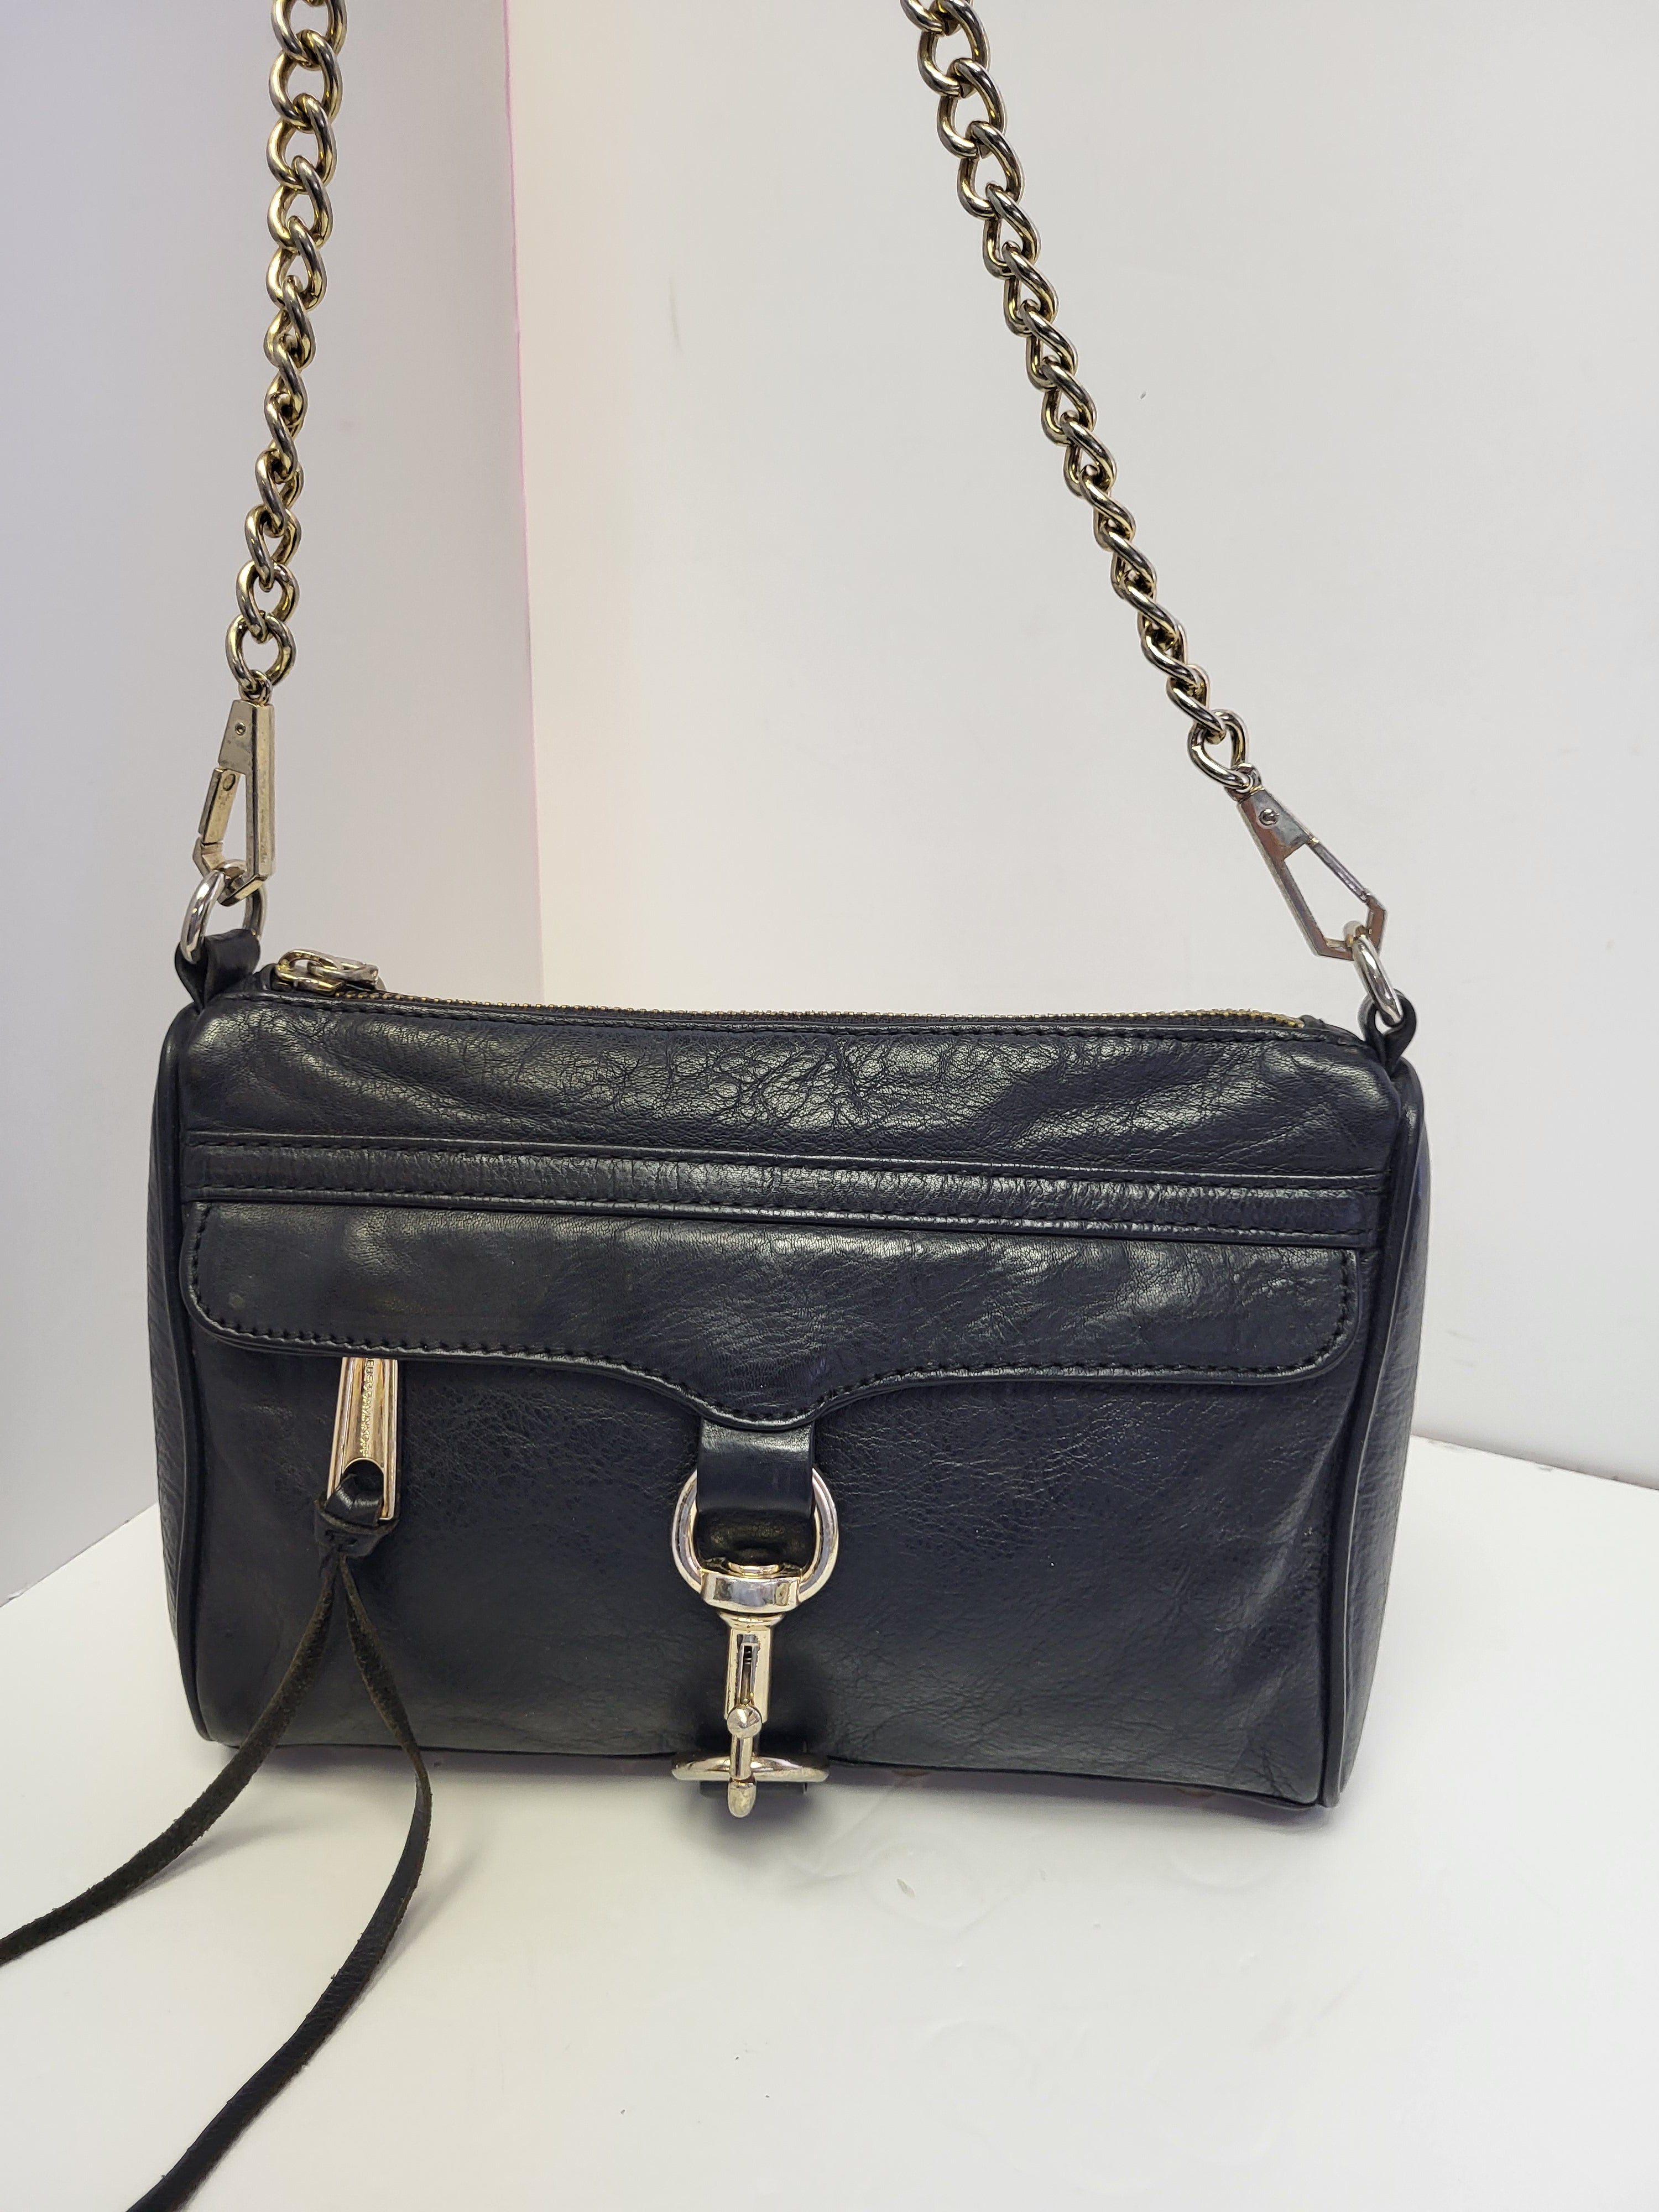 Rebecca Minkoff Black Leather Small Shoulder Bag